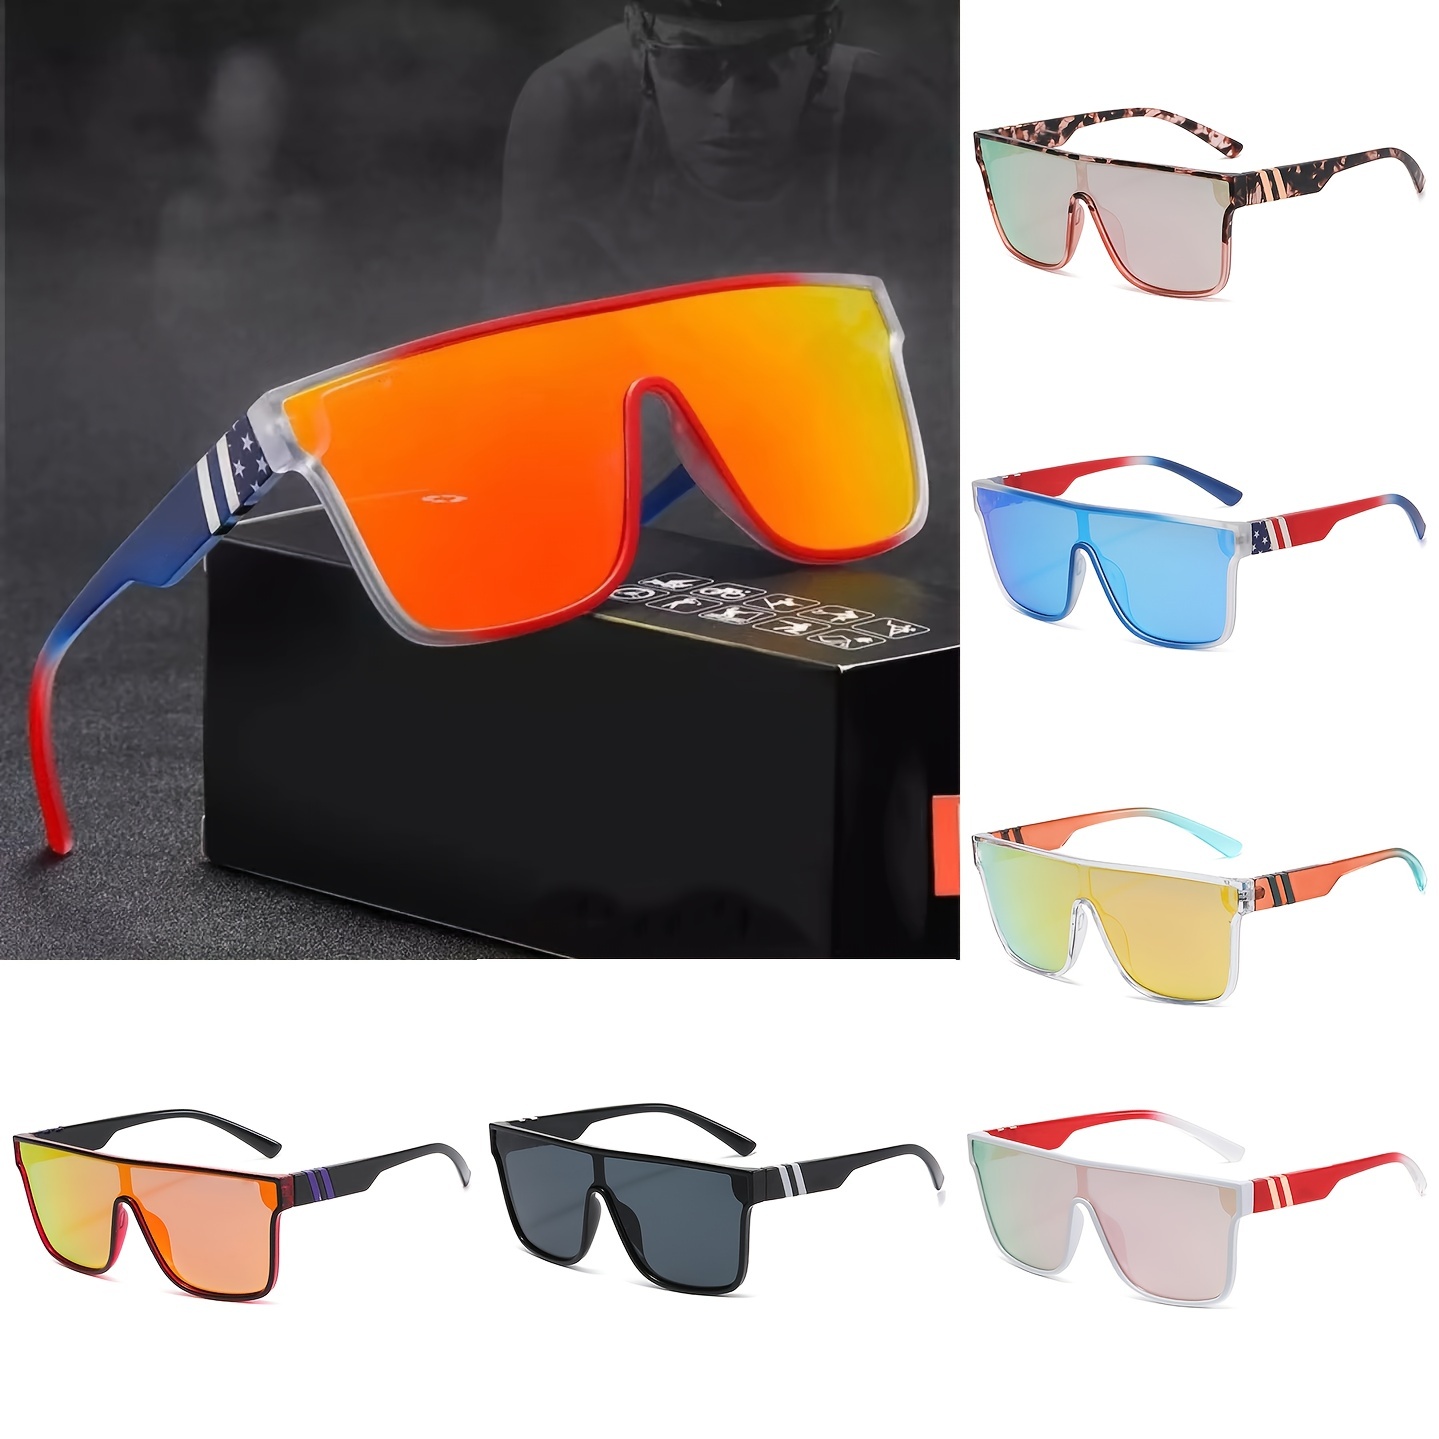 Gafas de sol Pit-Viper, gafas polarizadas para ciclismo Viper para